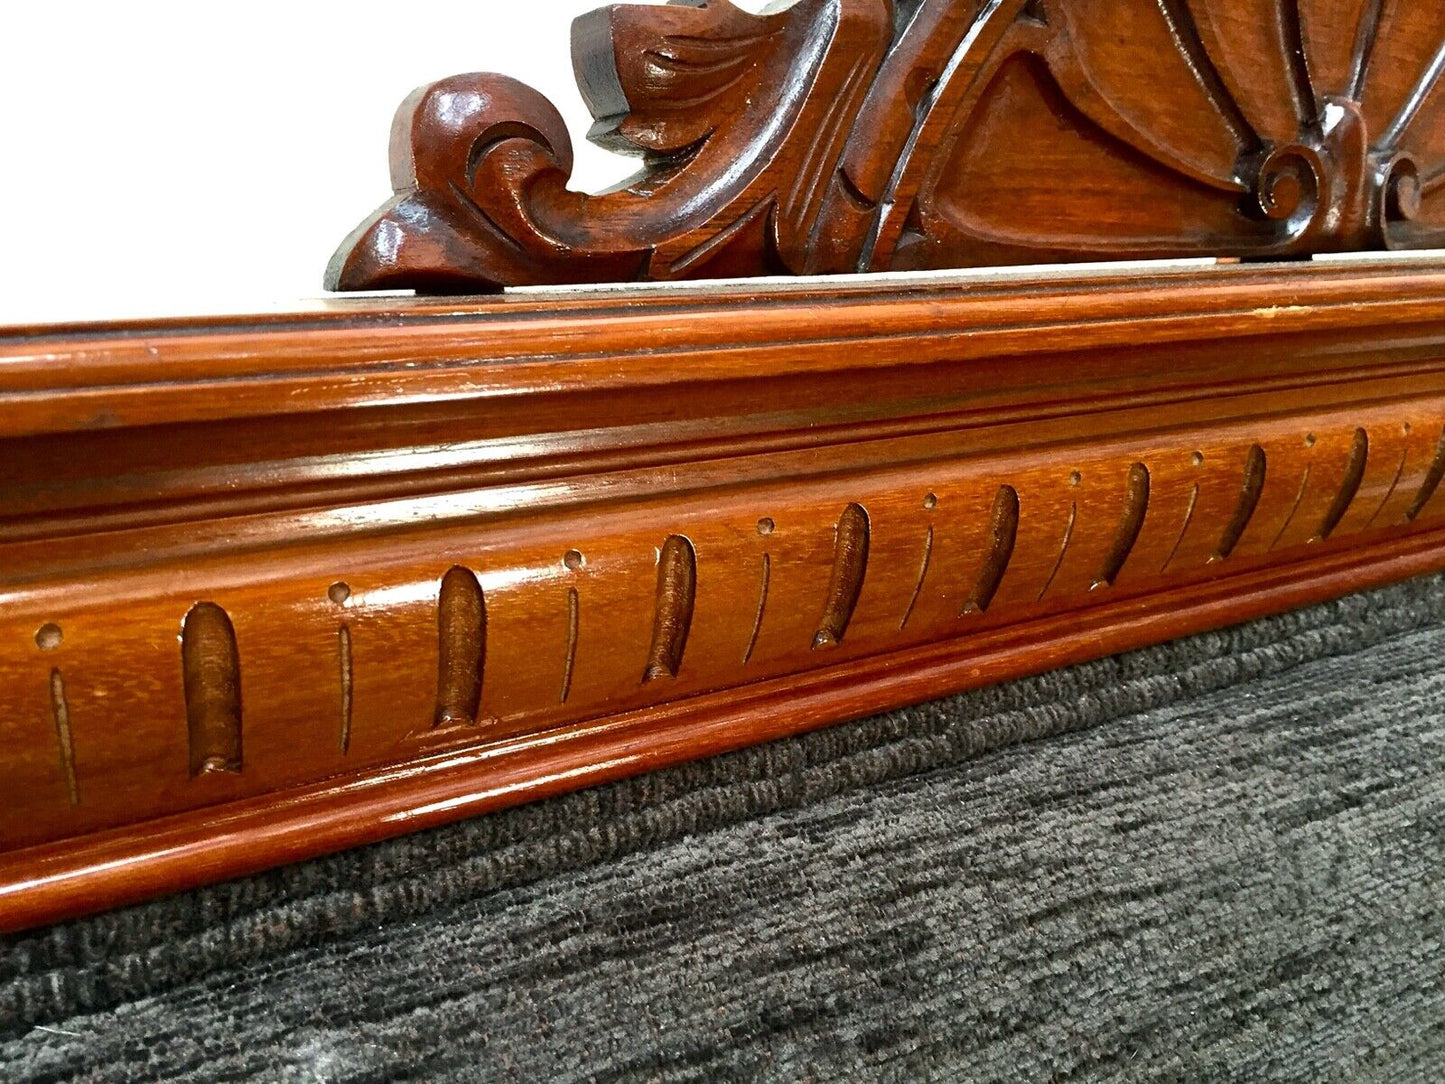 Antique Edwardian Walnut Framed Sofa / 2 Person Bench / Furniture c1910